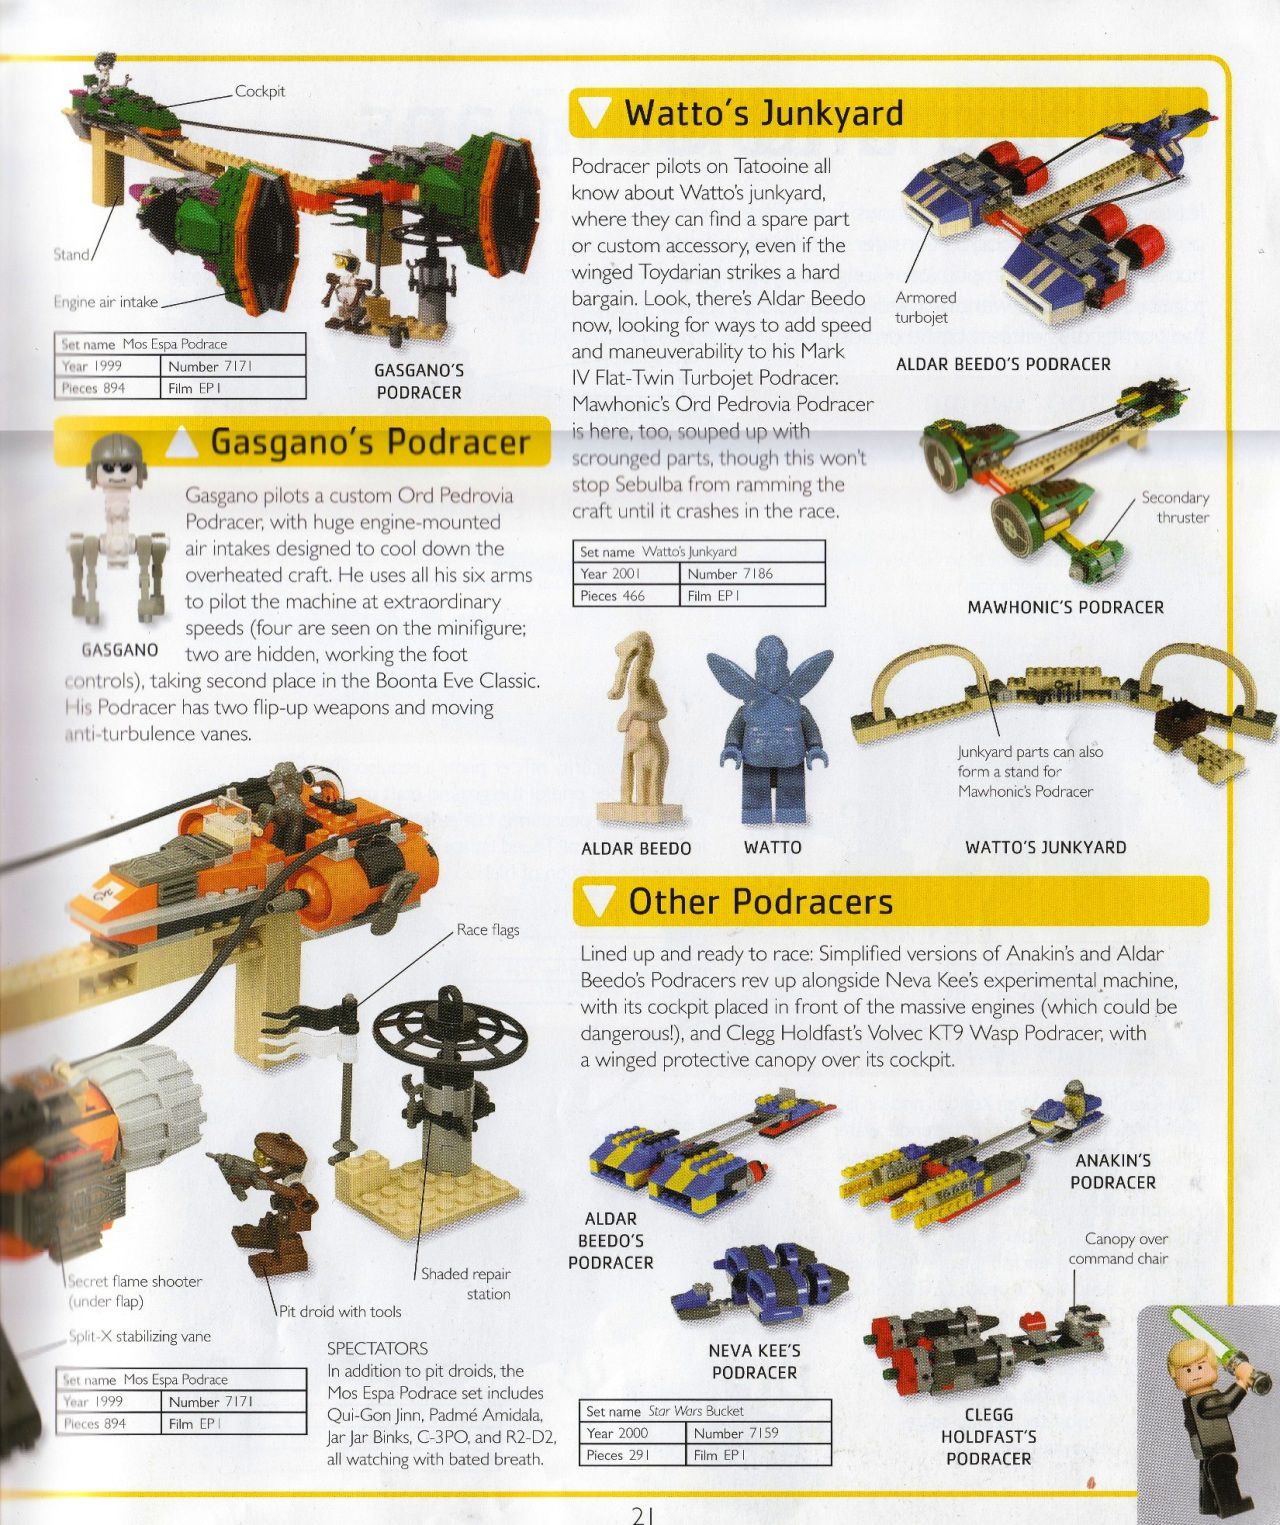 Lego Star Wars The Visual Dictionary 2009 Lego Star Wars The Visual Dictionary 2009 22